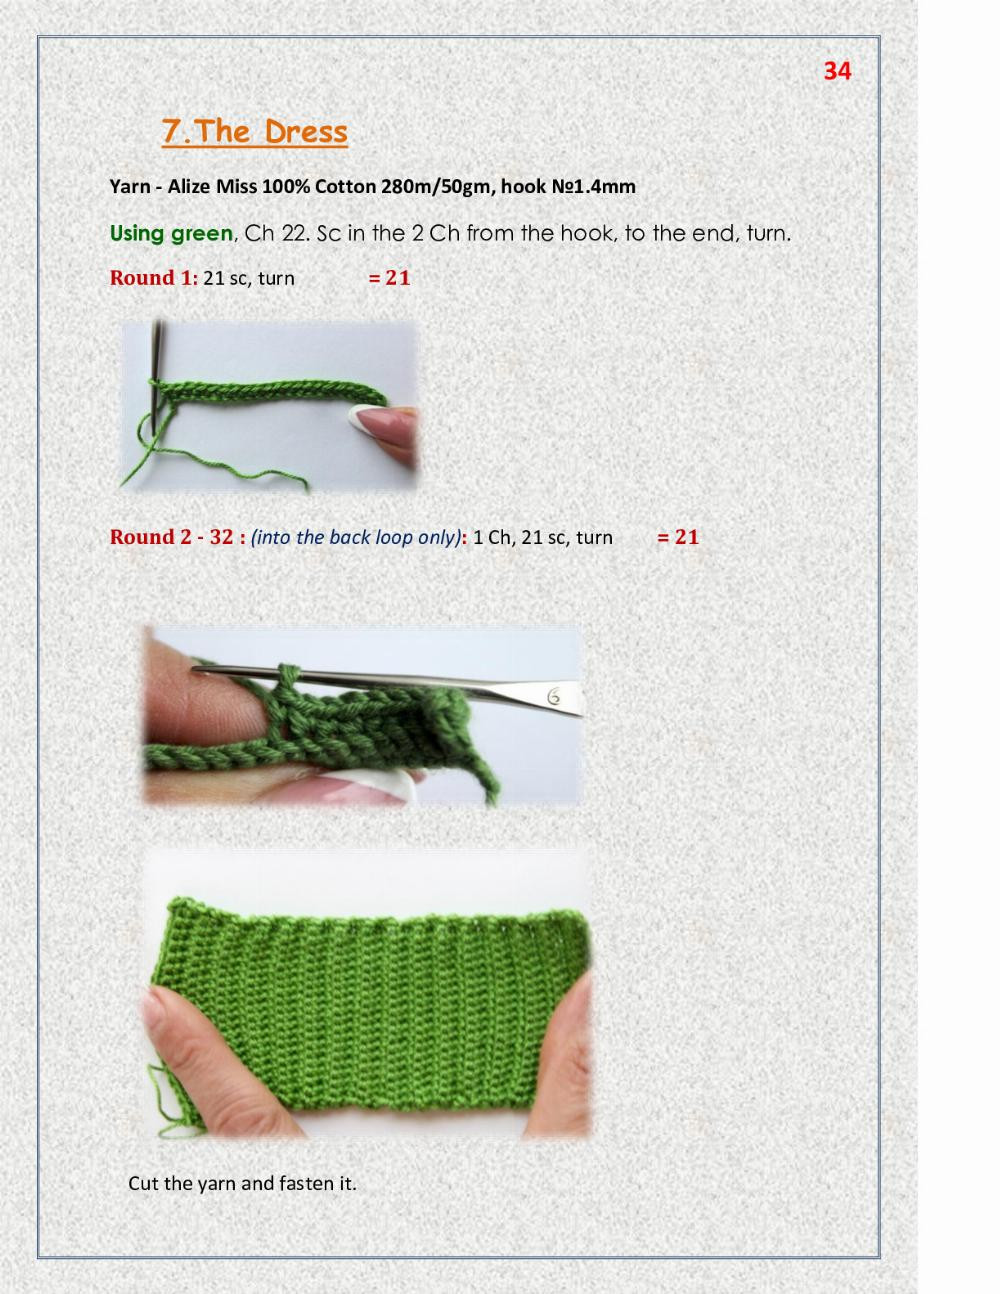 Crochet pattern doll Brianna